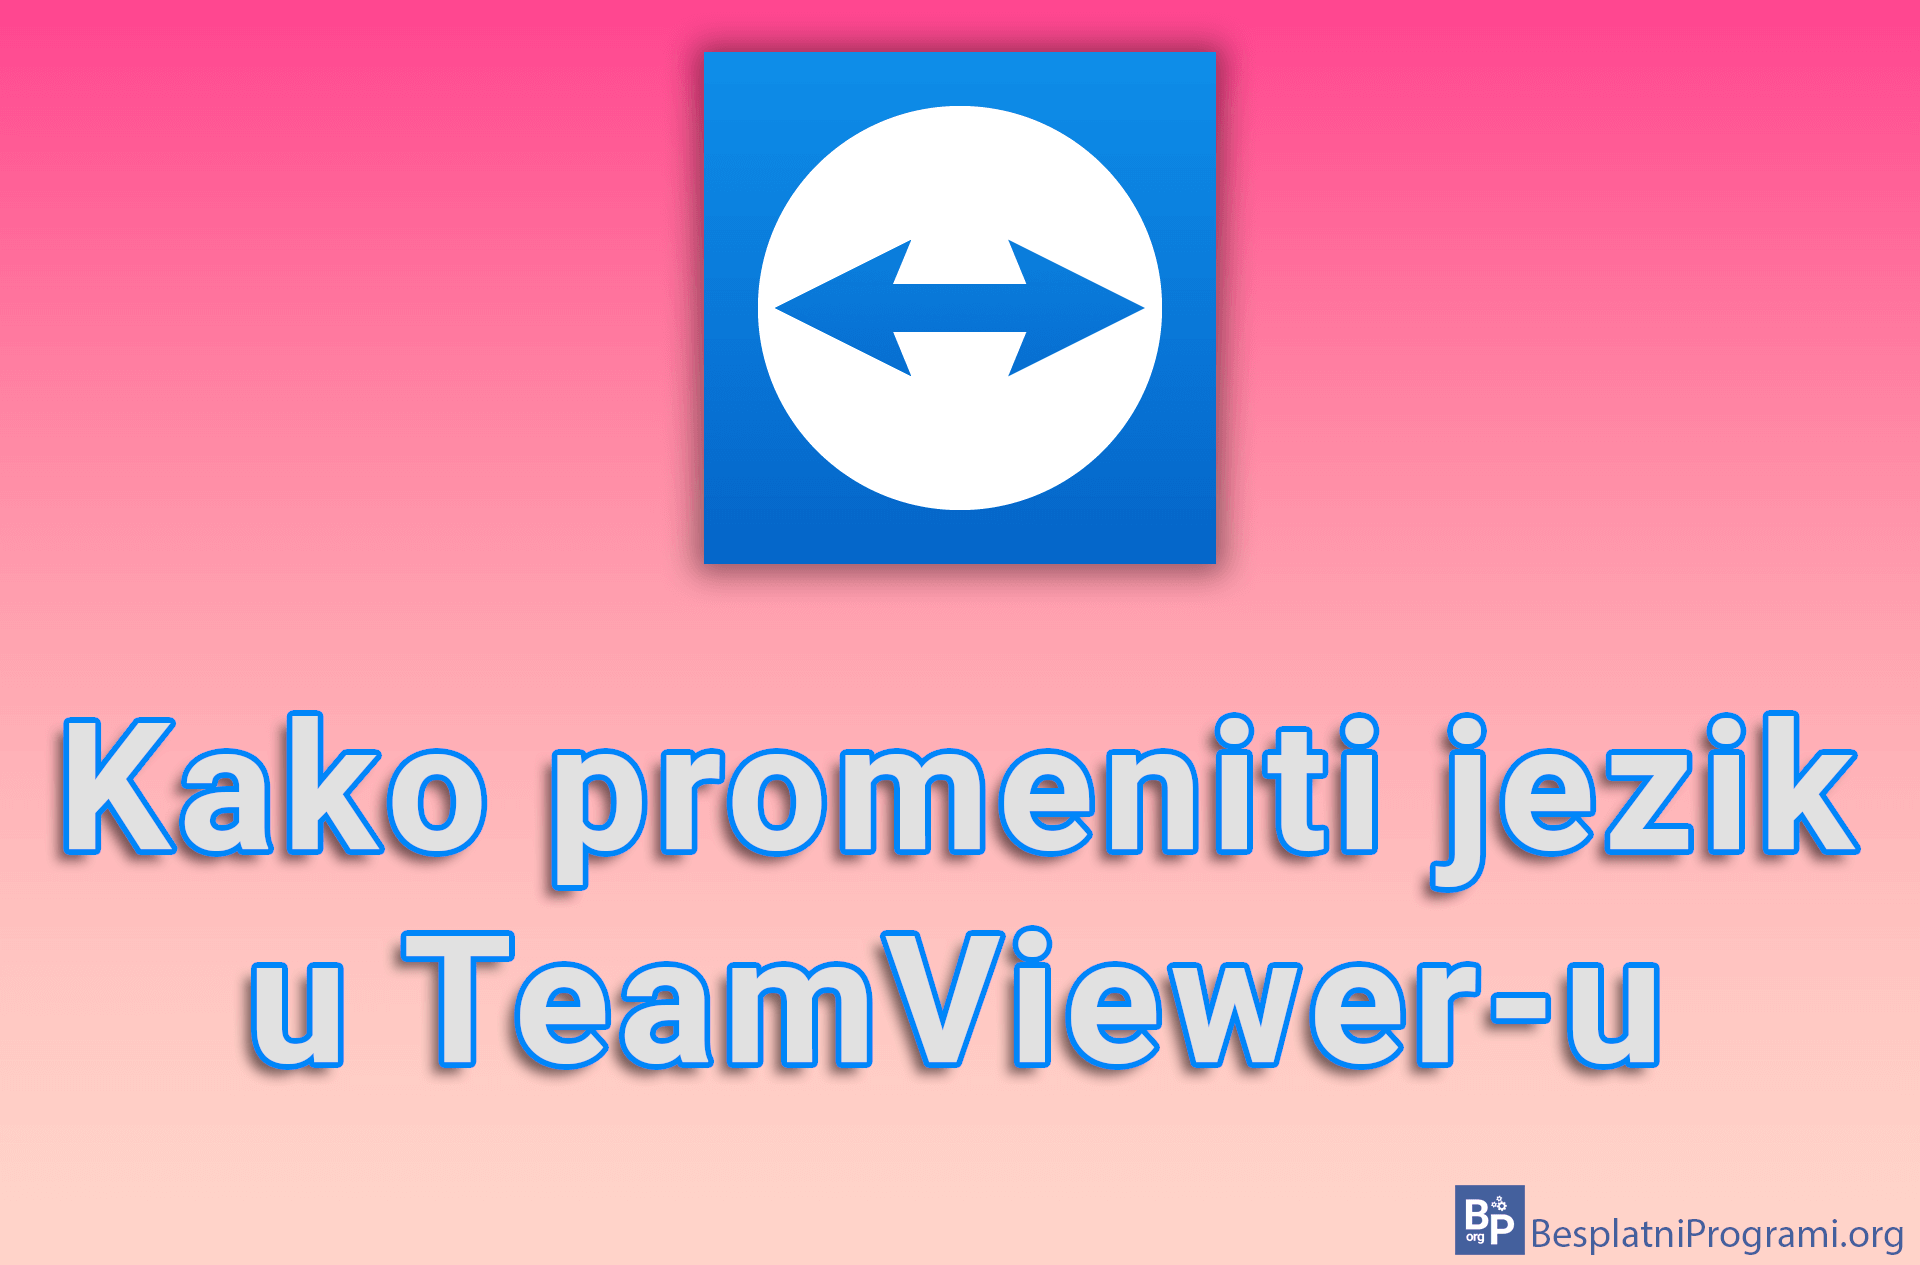 Kako promeniti jezik u TeamViewer-u